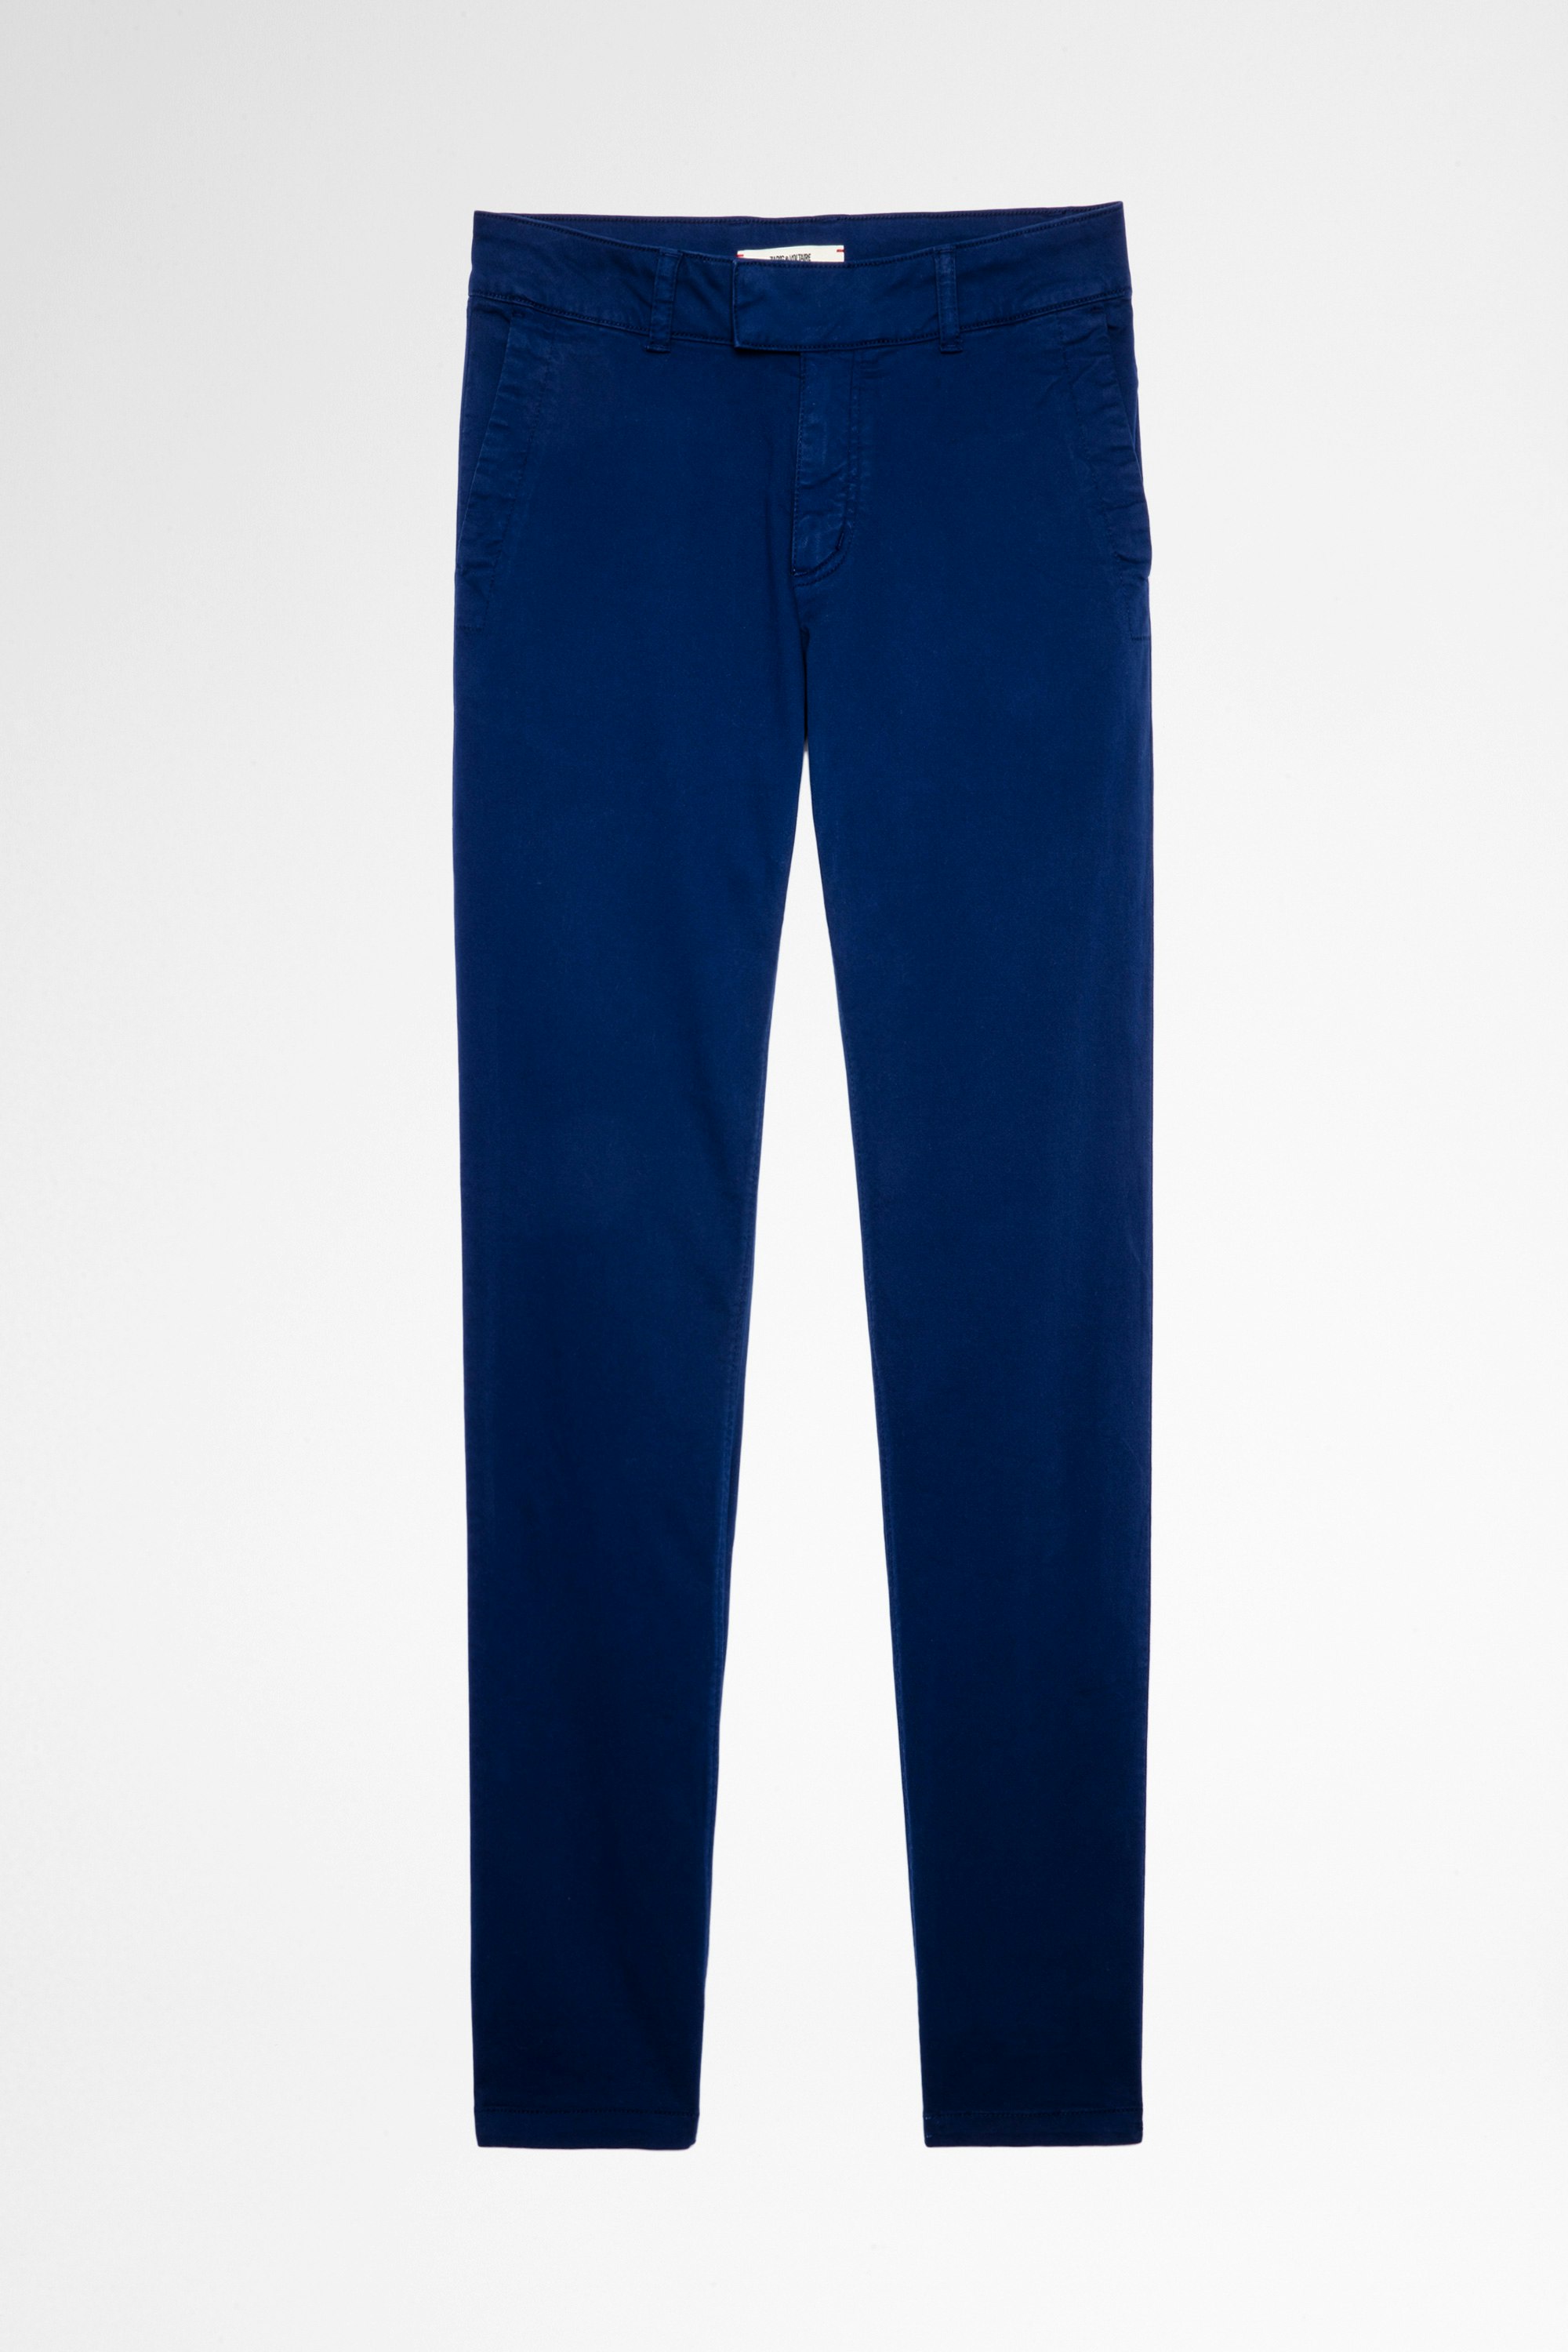 Pantaloni Philo Pantaloni in cotone blu reale uomo